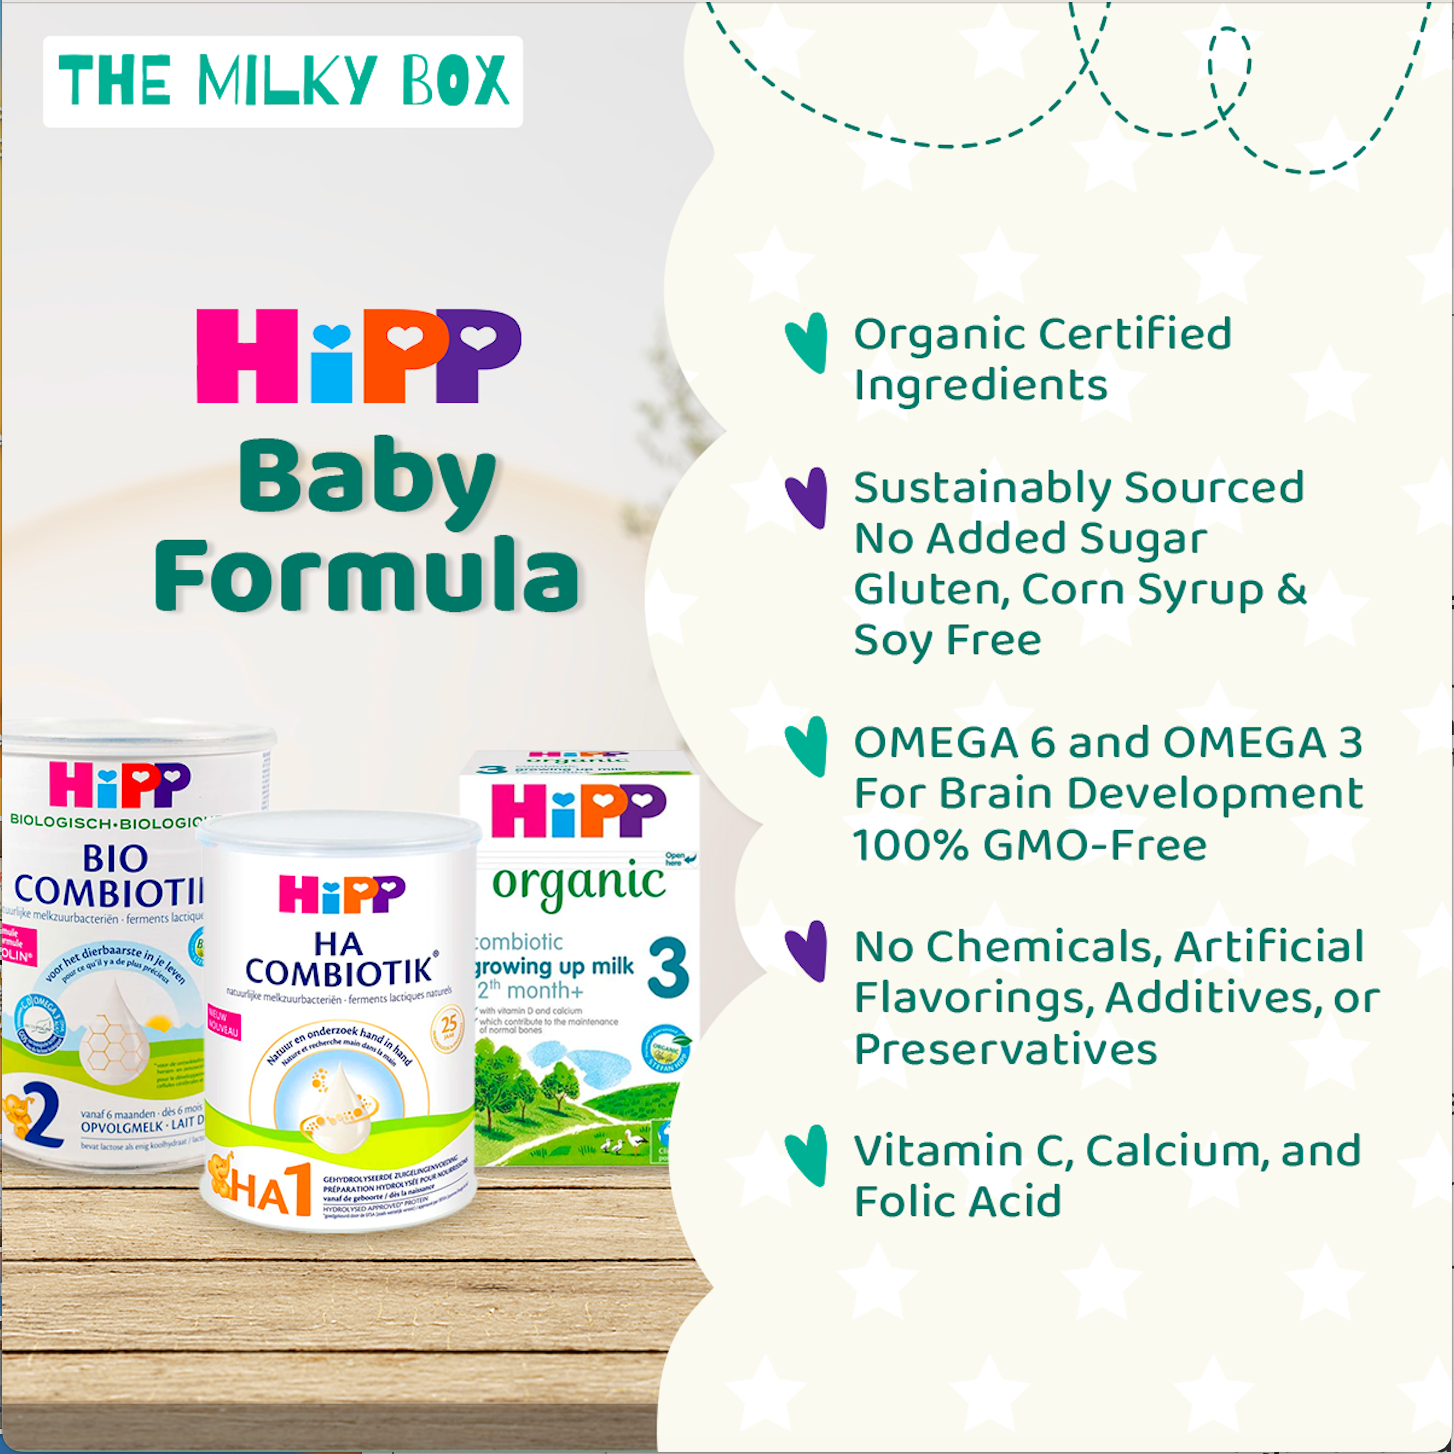 Hipp Baby Formula versions